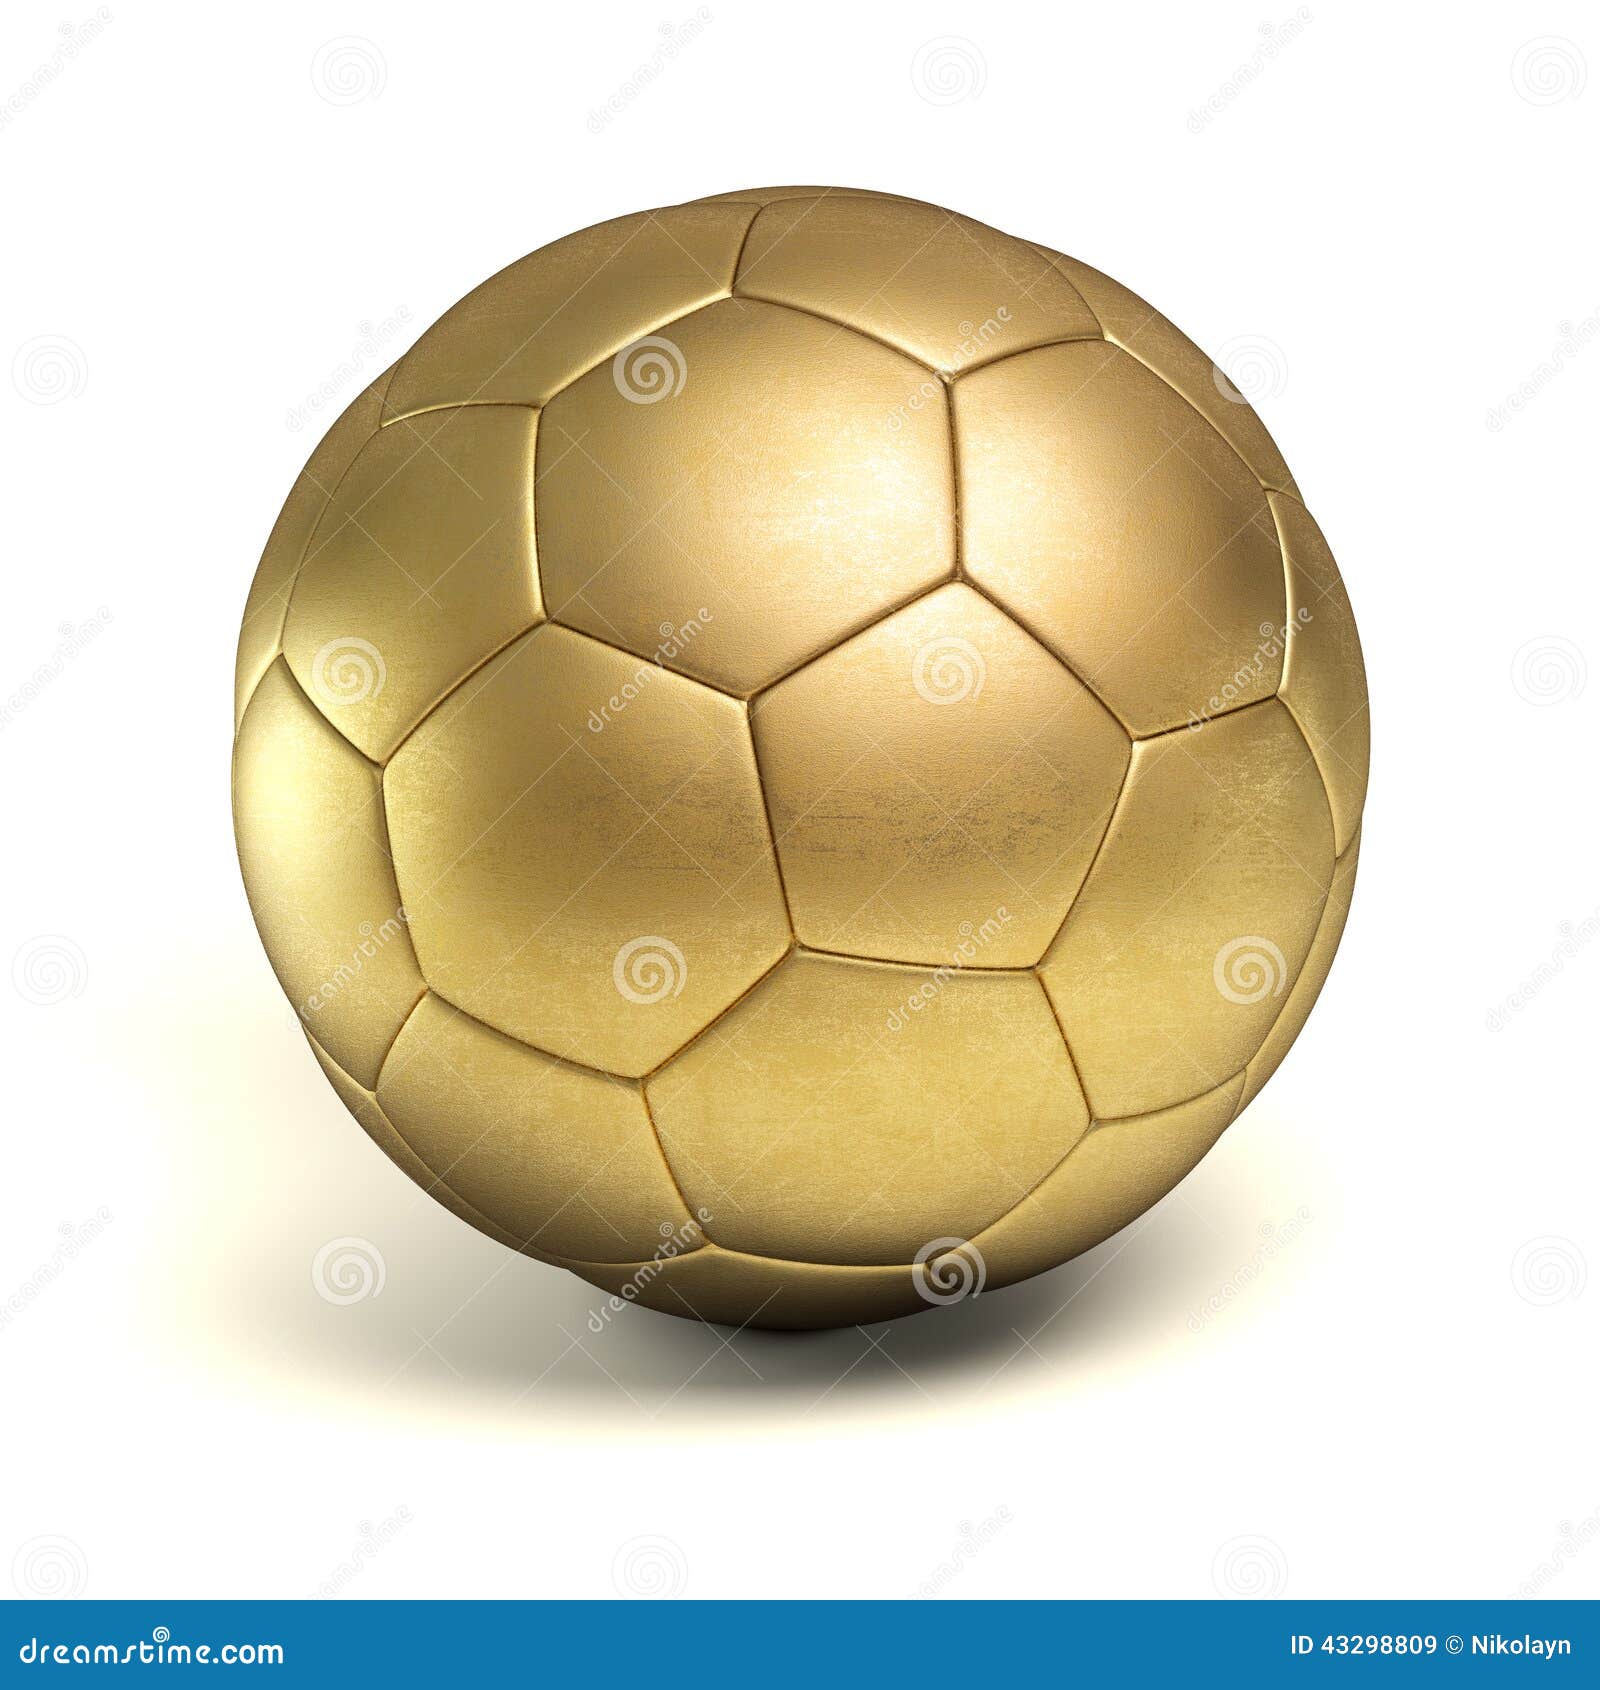 Golden soccer ball stock illustration. Illustration of glossy - 43298809